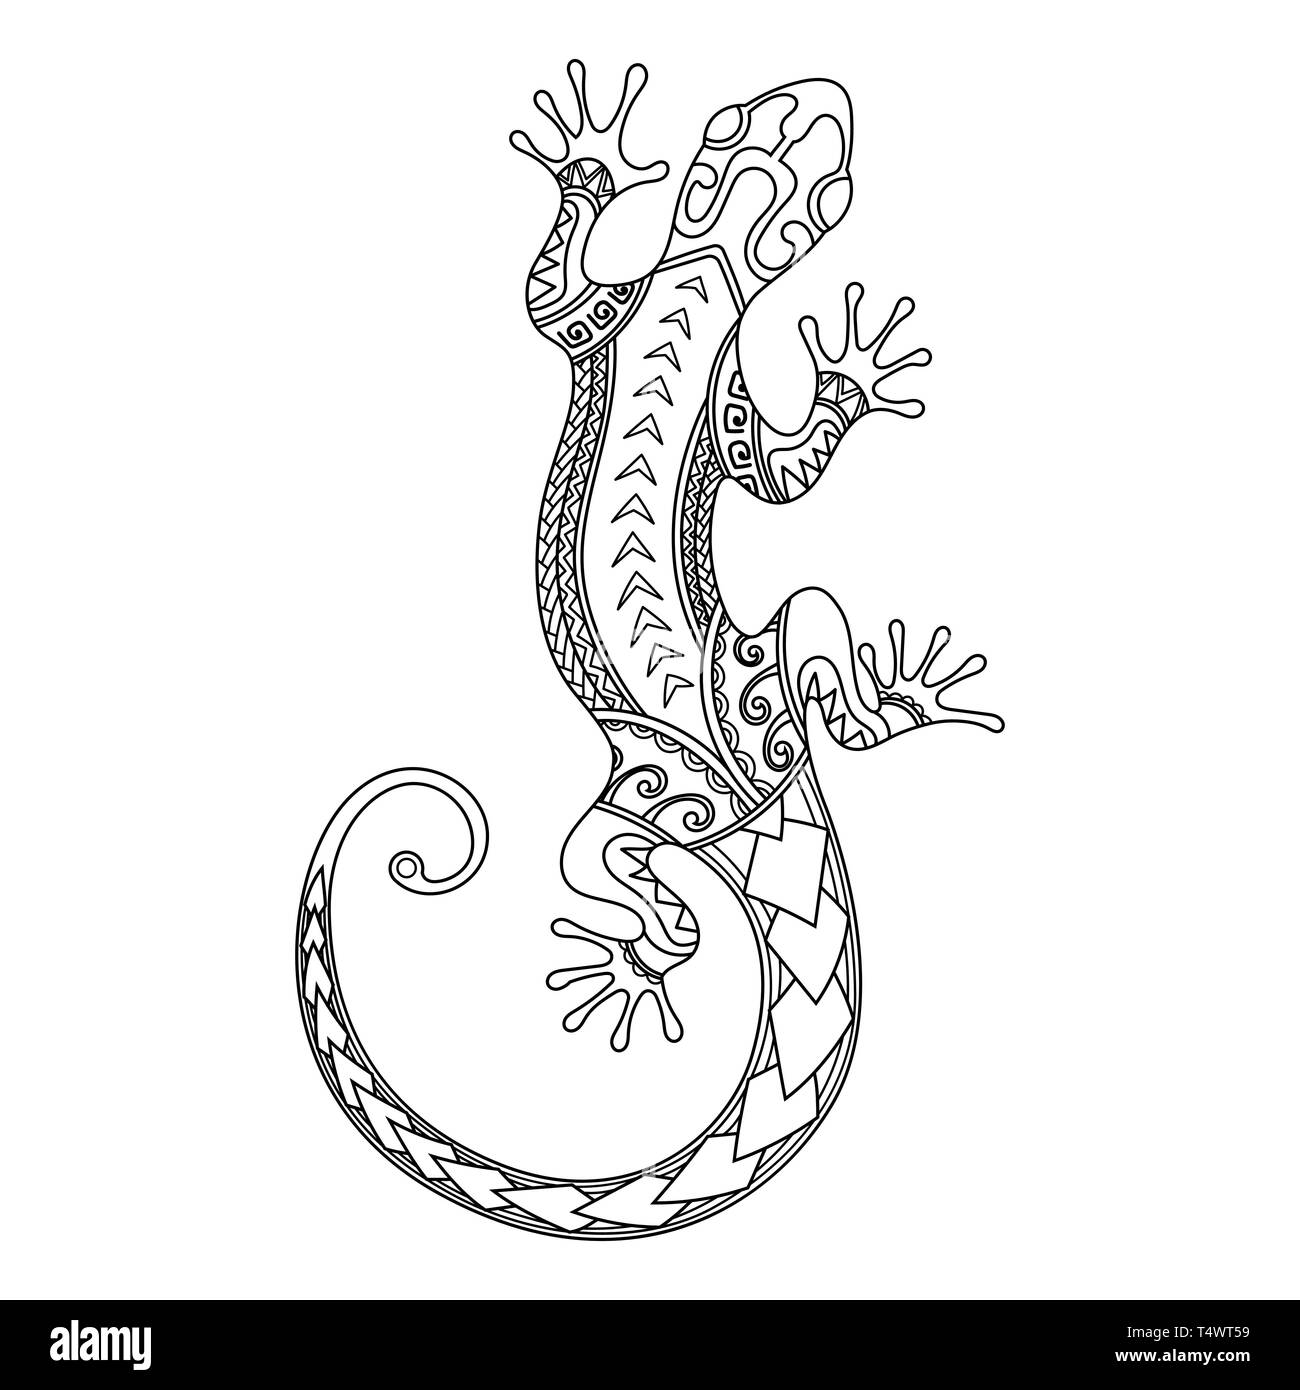 Hand drawn Polynesian lizard design. Polynesian tattoo. Maori style. Abstract gecko vector illustration Stock Vector